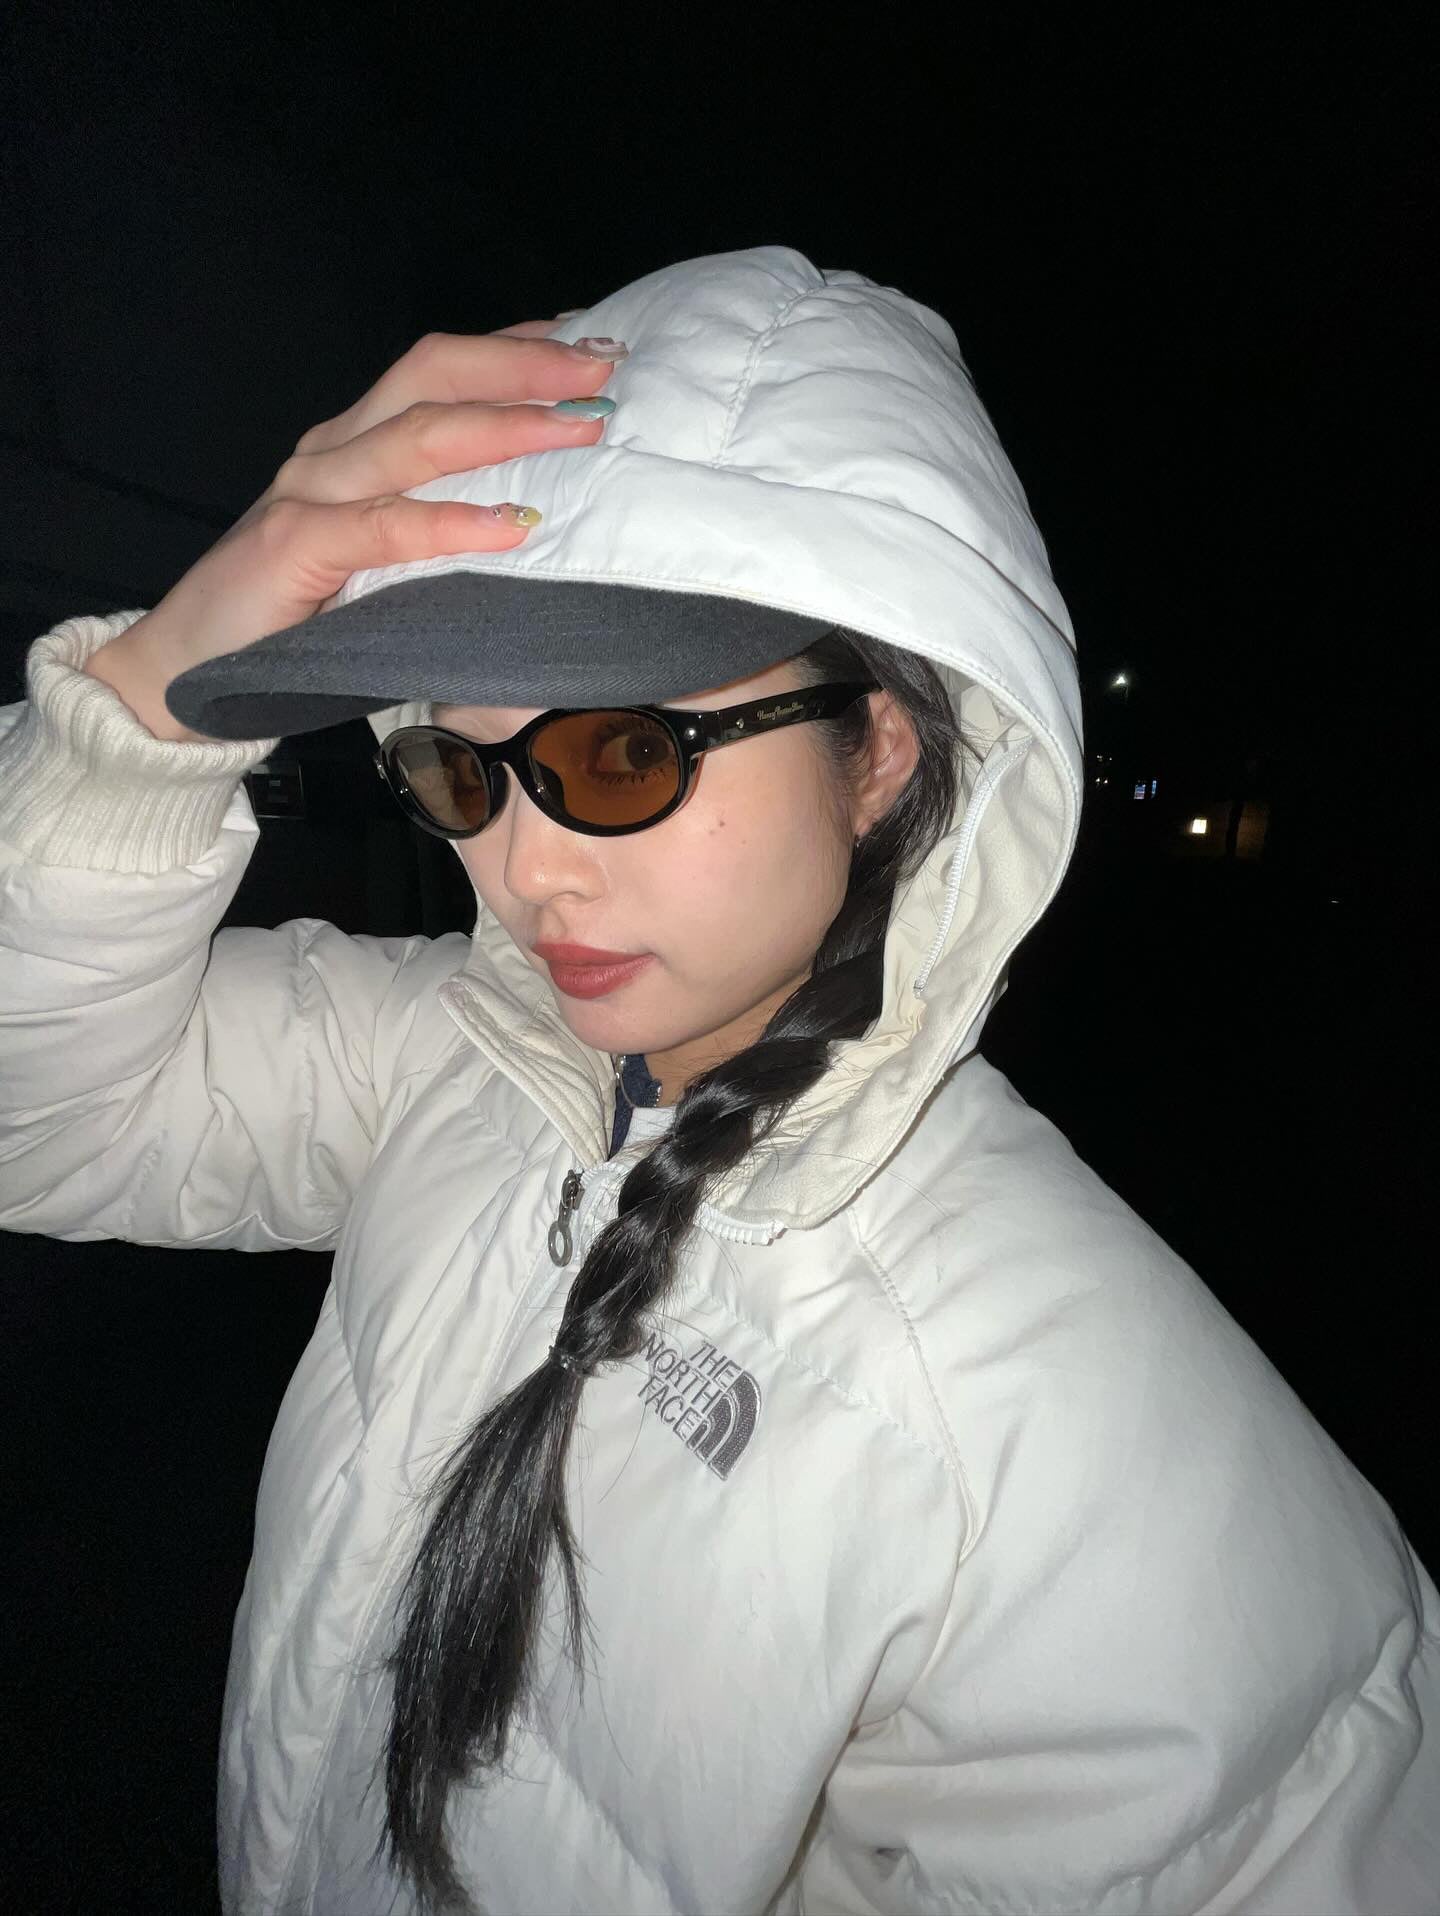 Fashion round sunglasses - 𝐇𝐨𝐧𝐞𝐲 𝐁𝐮𝐭𝐭𝐞𝐫 𝐍𝐢𝐧𝐞